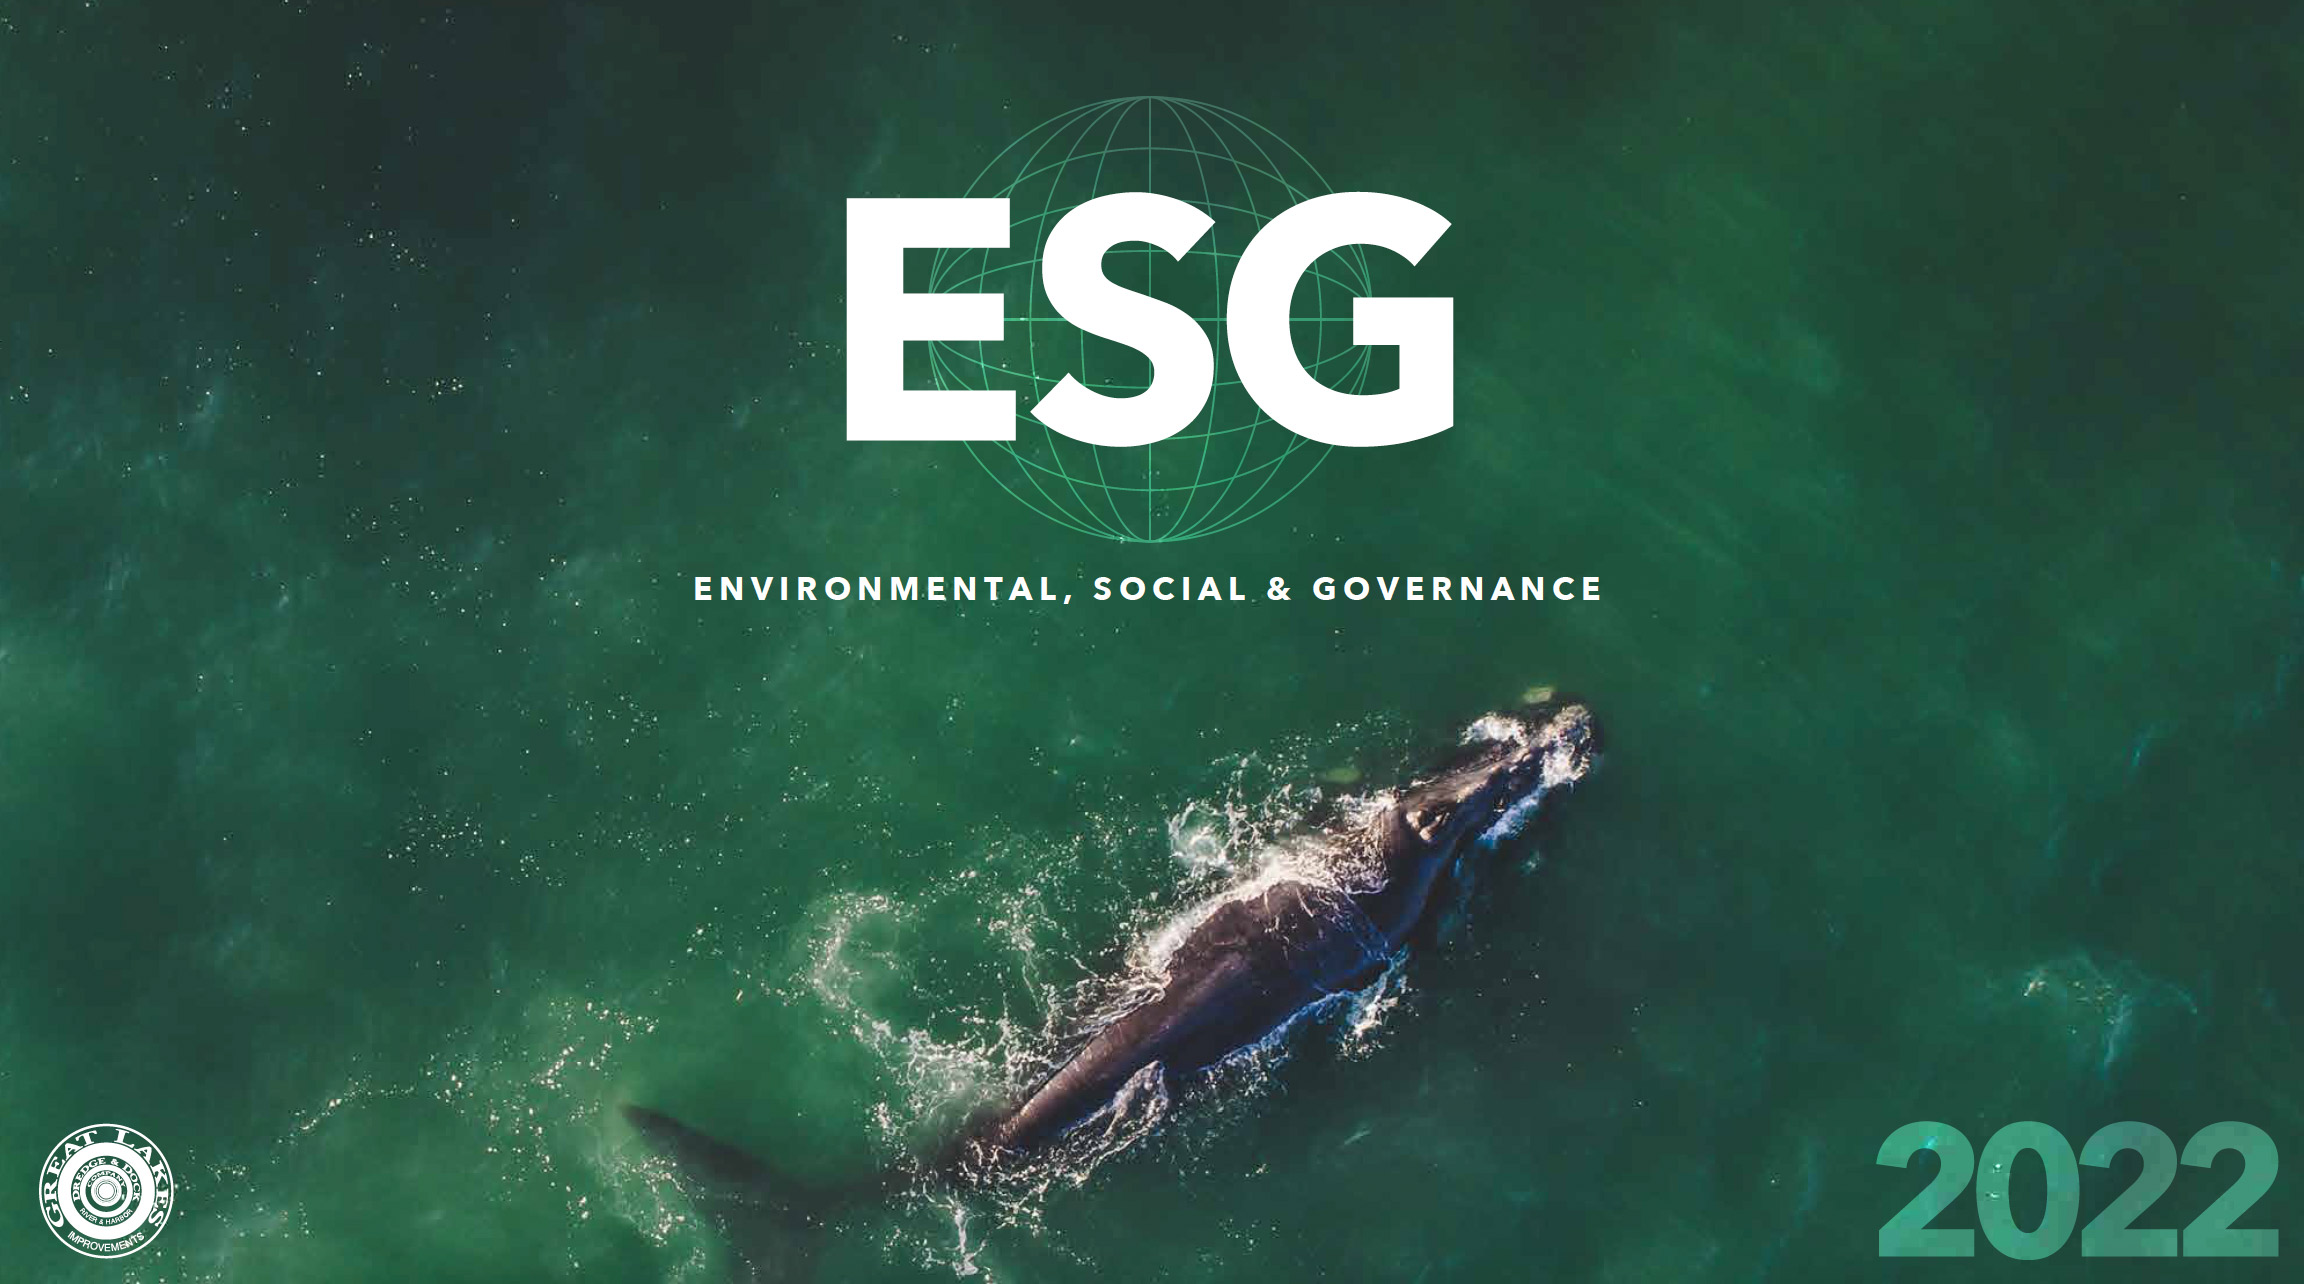 Environmental, Social & Governance